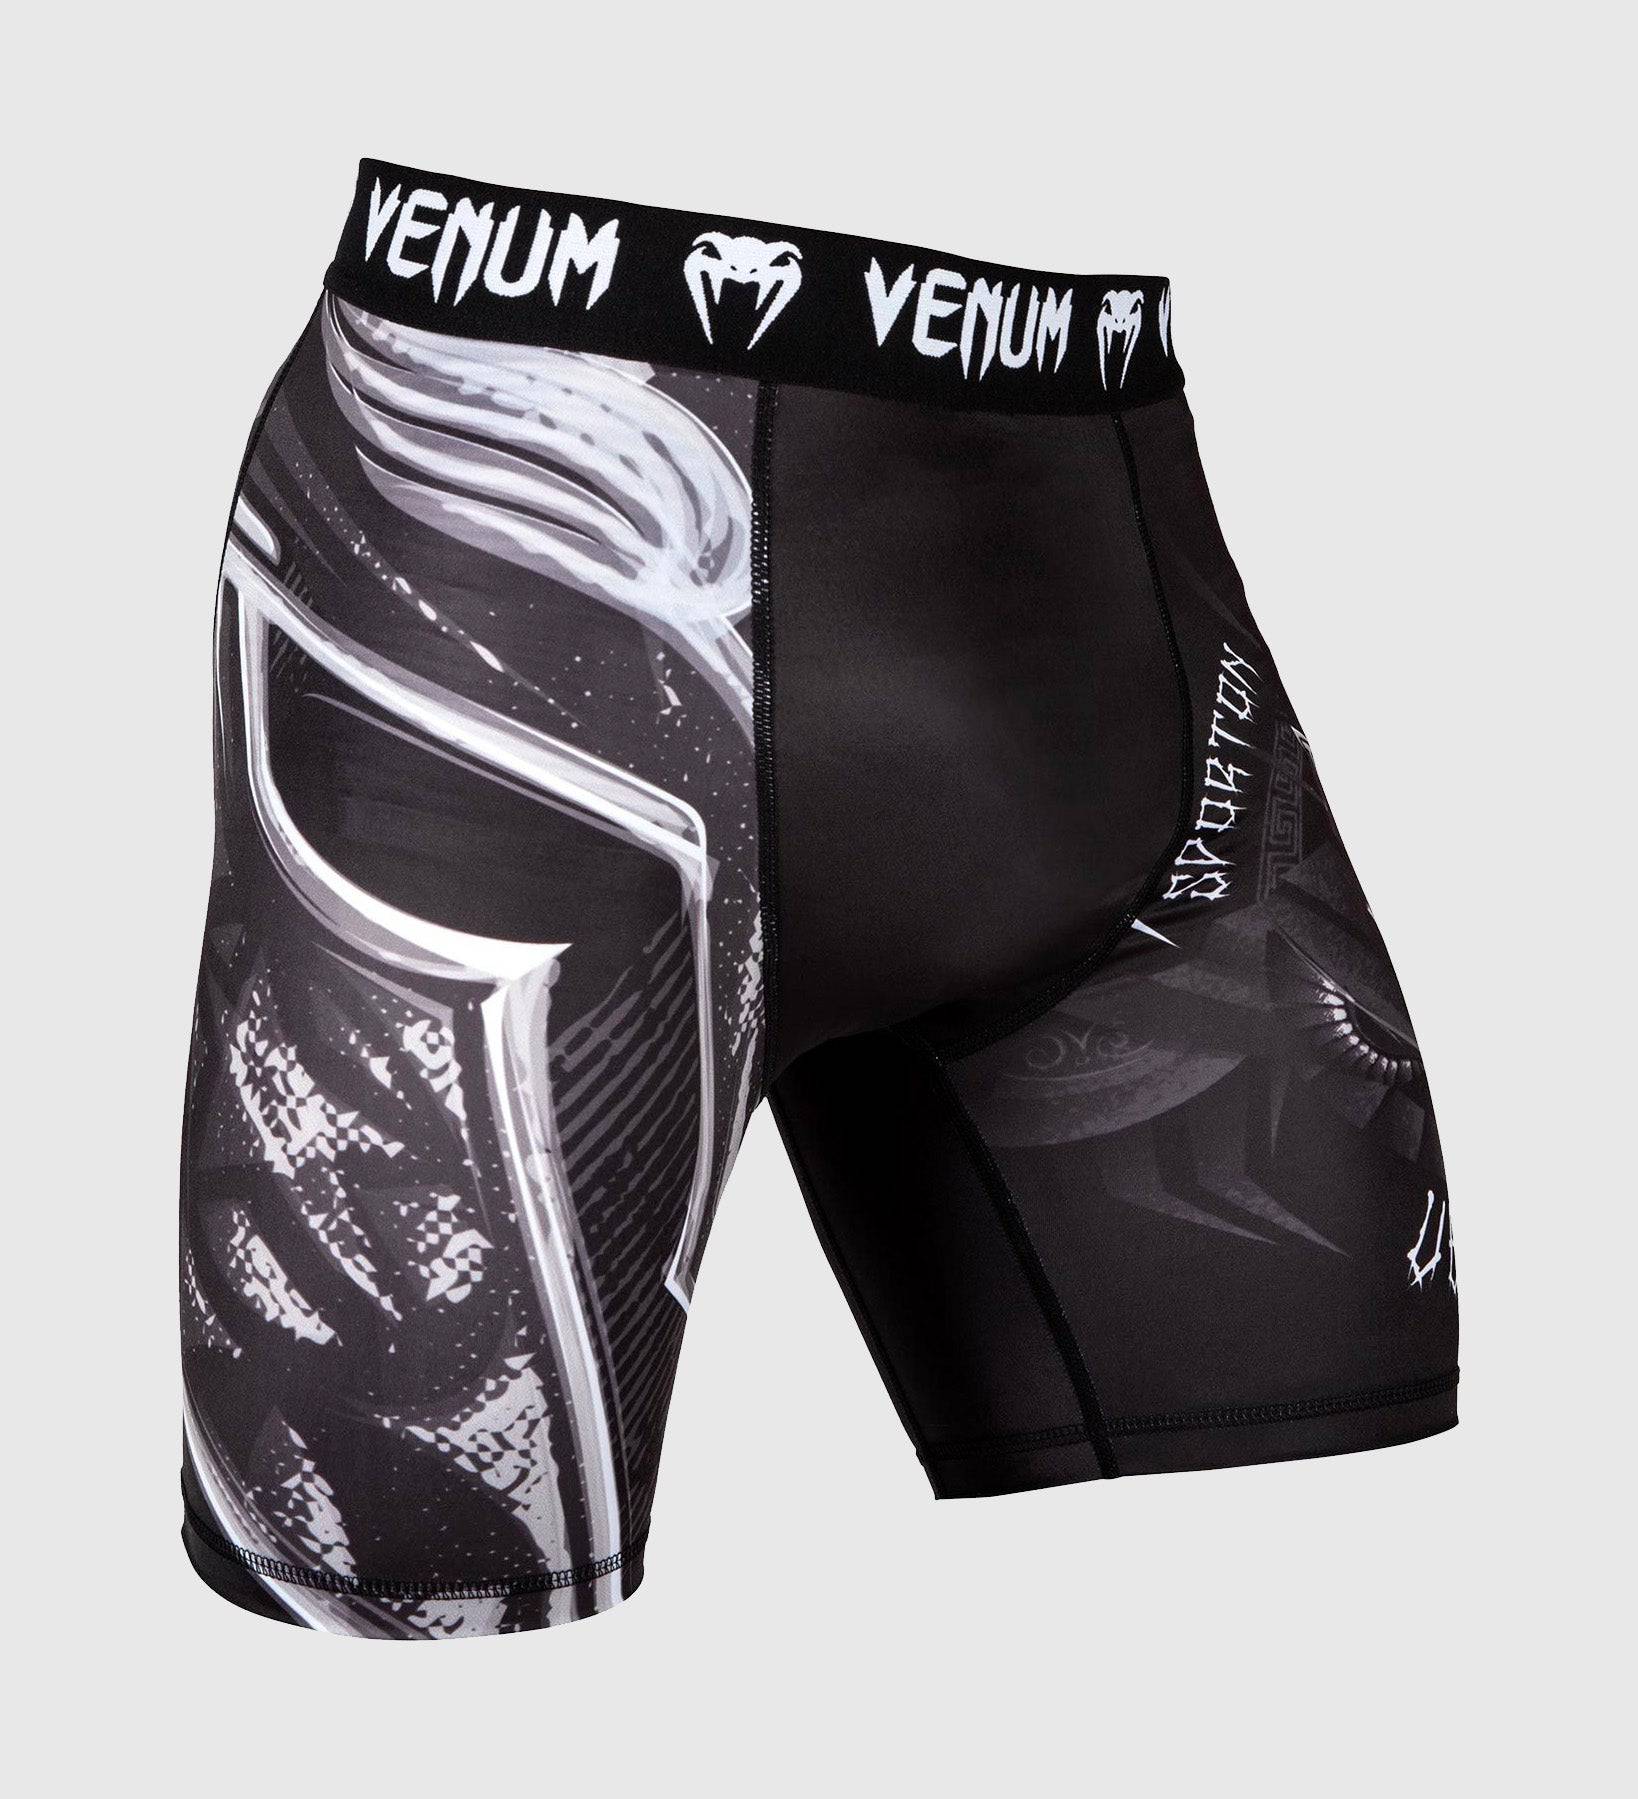 Venum Compression Shorts Gladiator 3.0 - Schwarz/Grau/Weiss